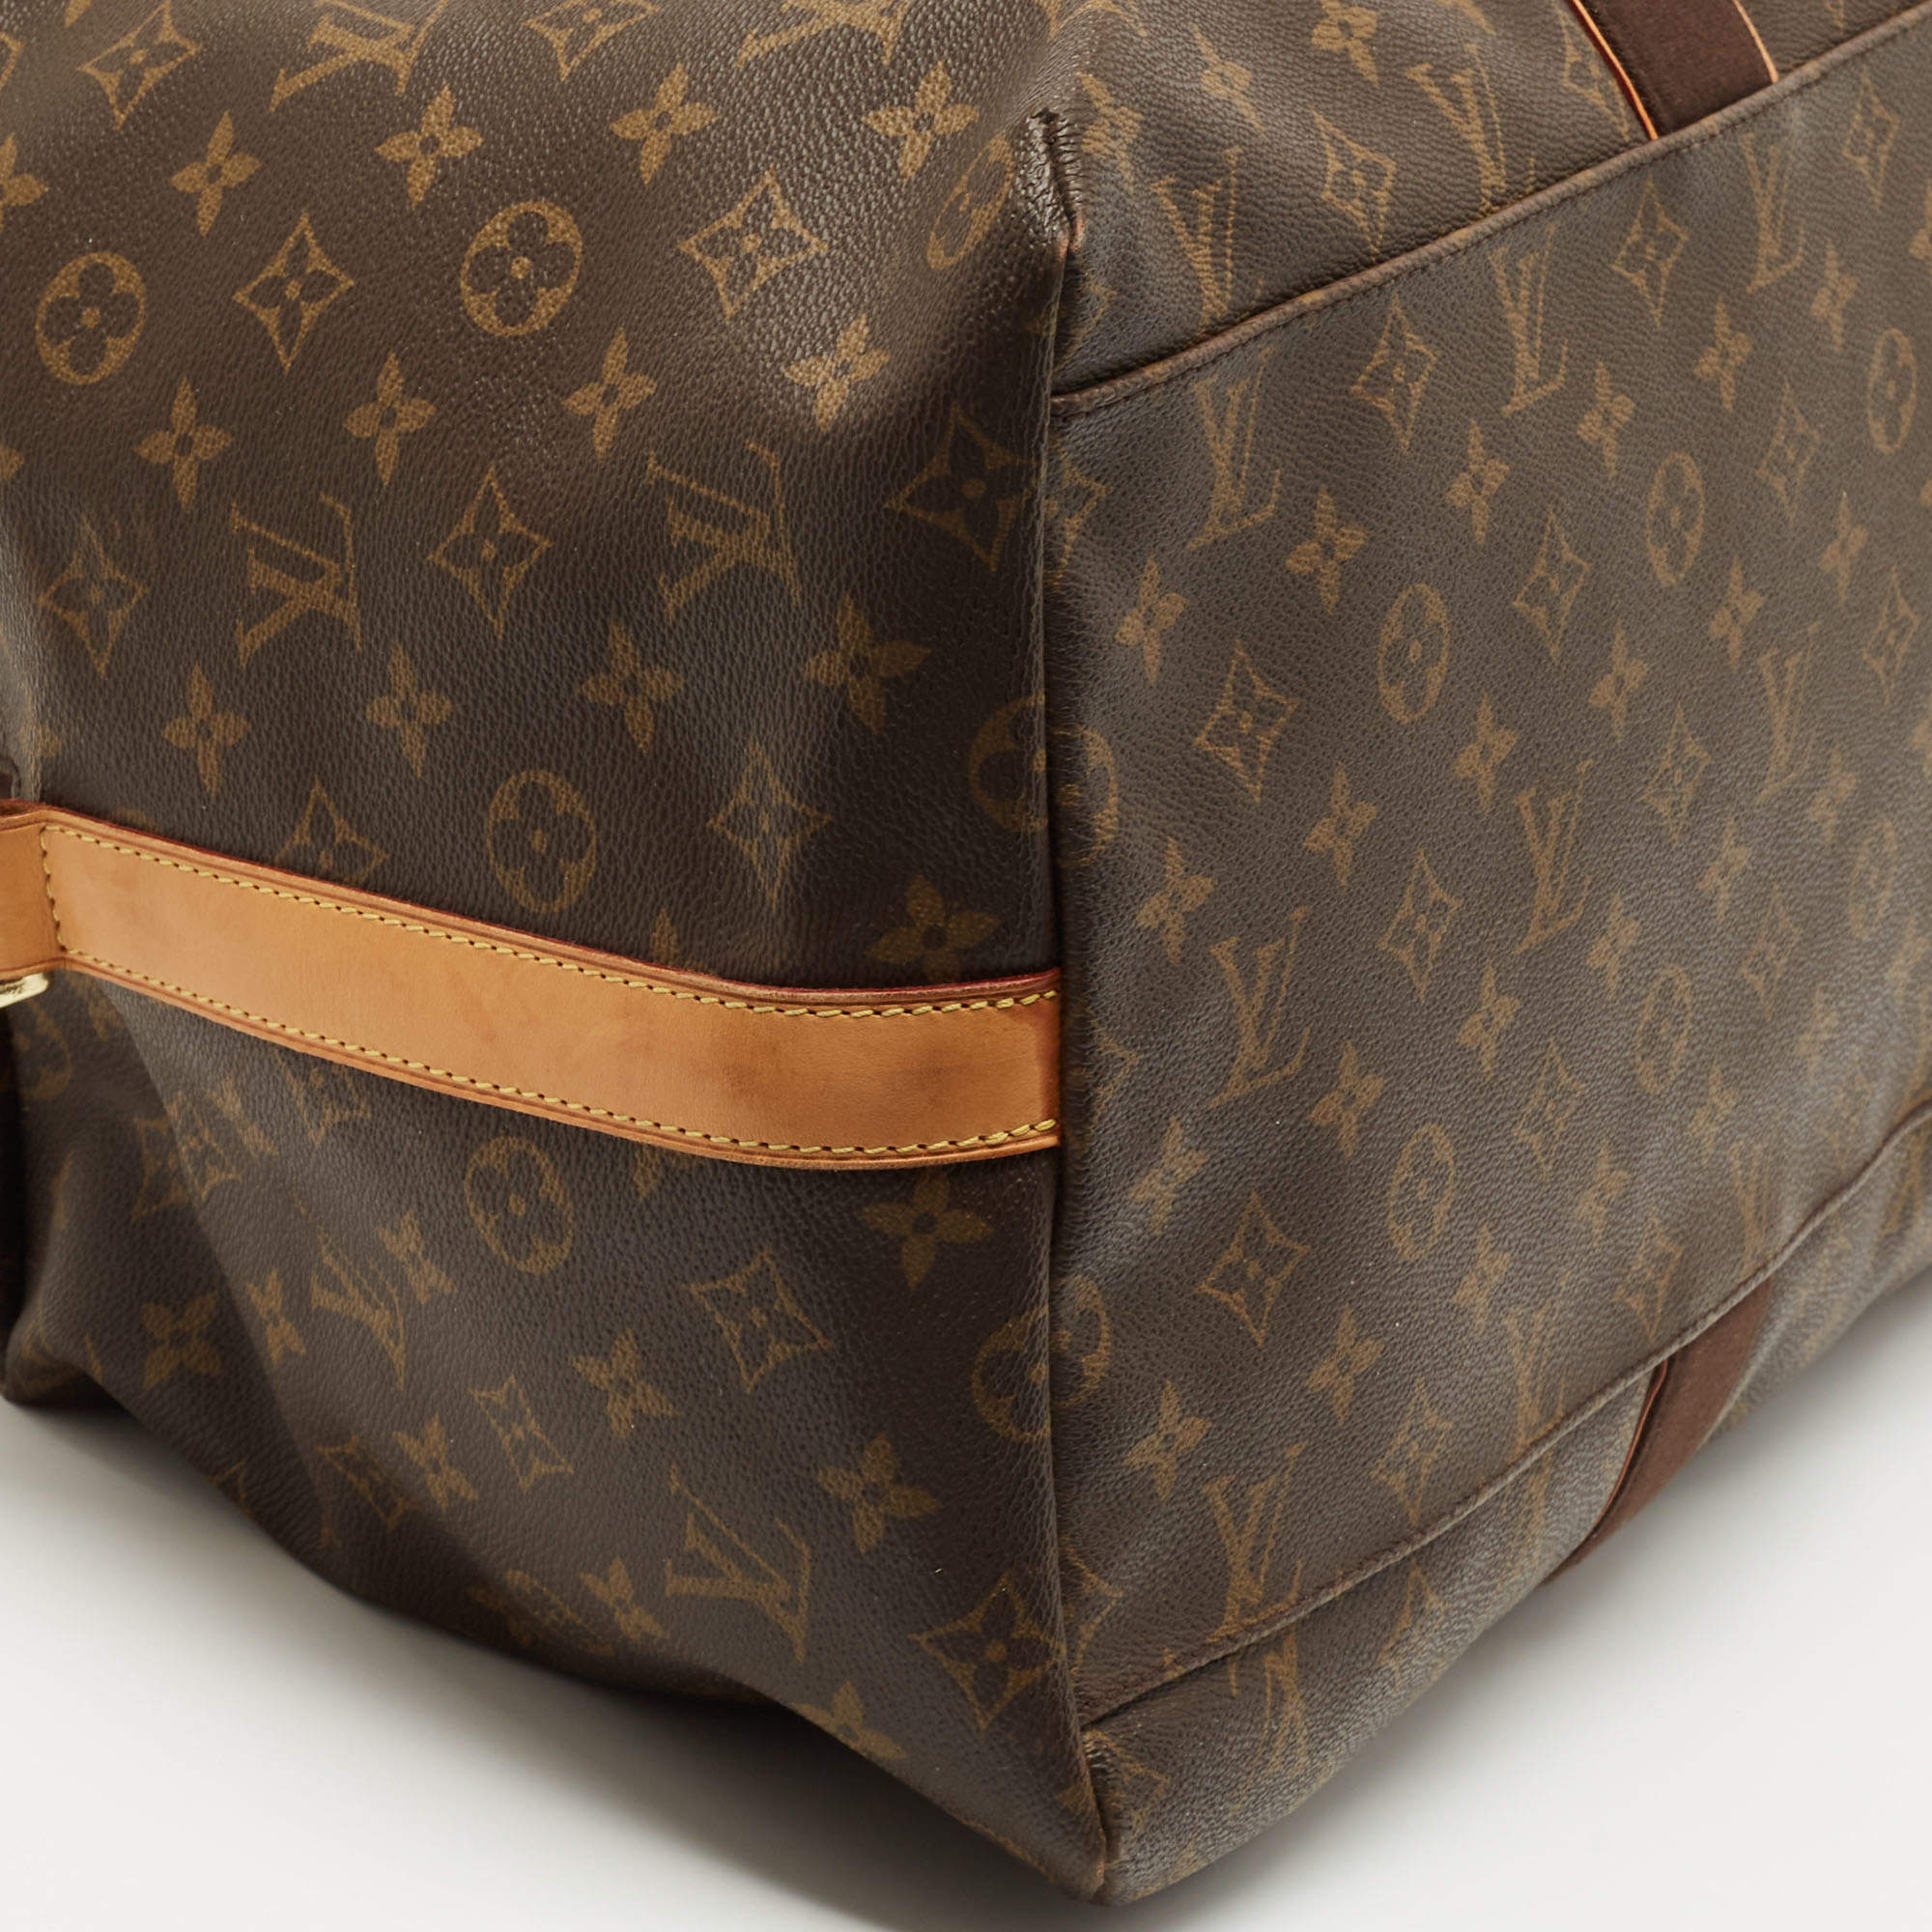 Louis Vuitton, Bags, Louis Vuitton Beaubourg Weekender Mg Canvas Bag